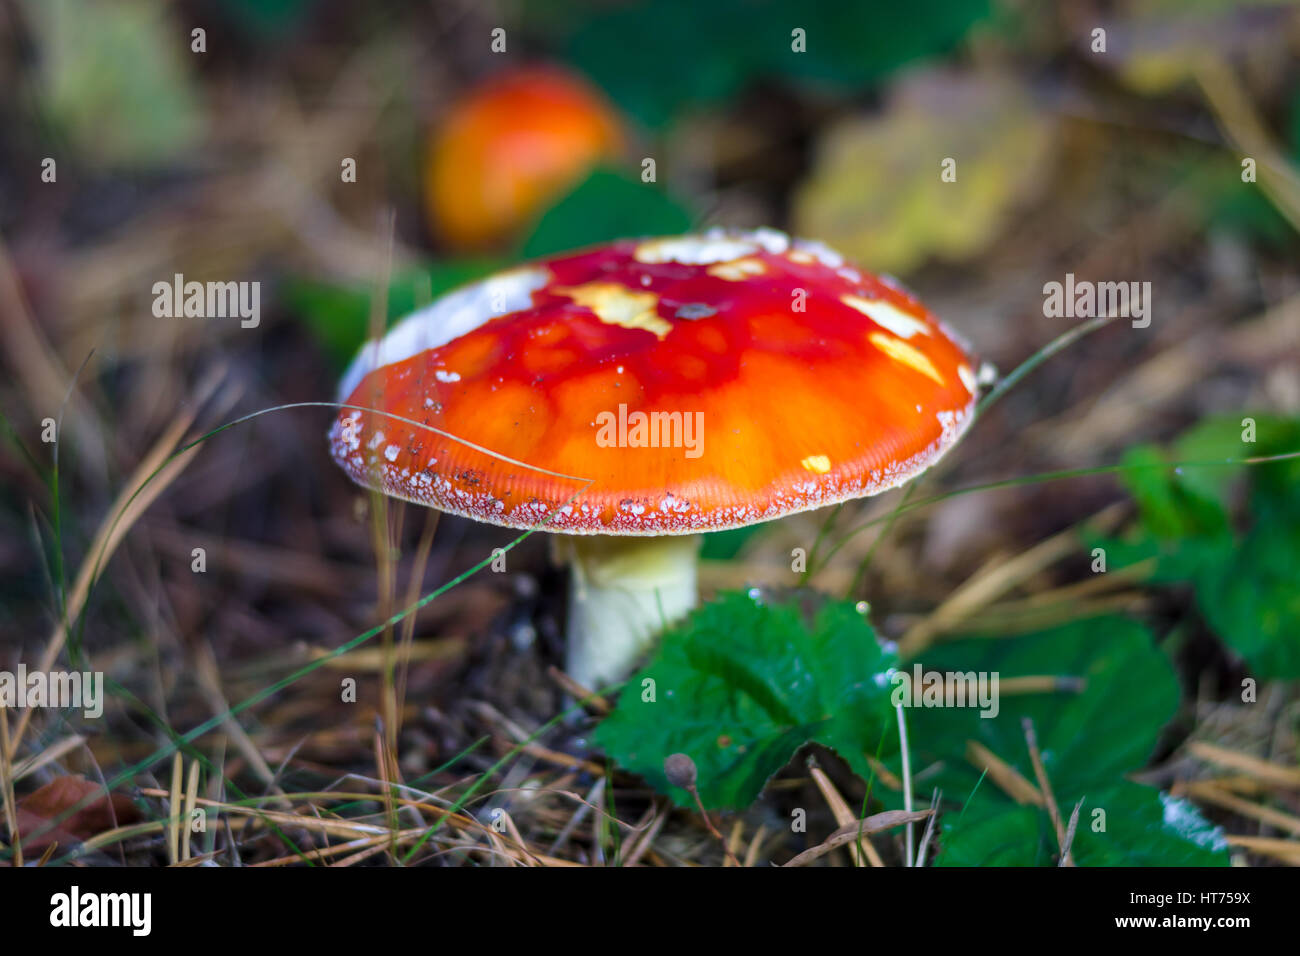 Autumn mushroom Amanita muscaria. Stock Photo